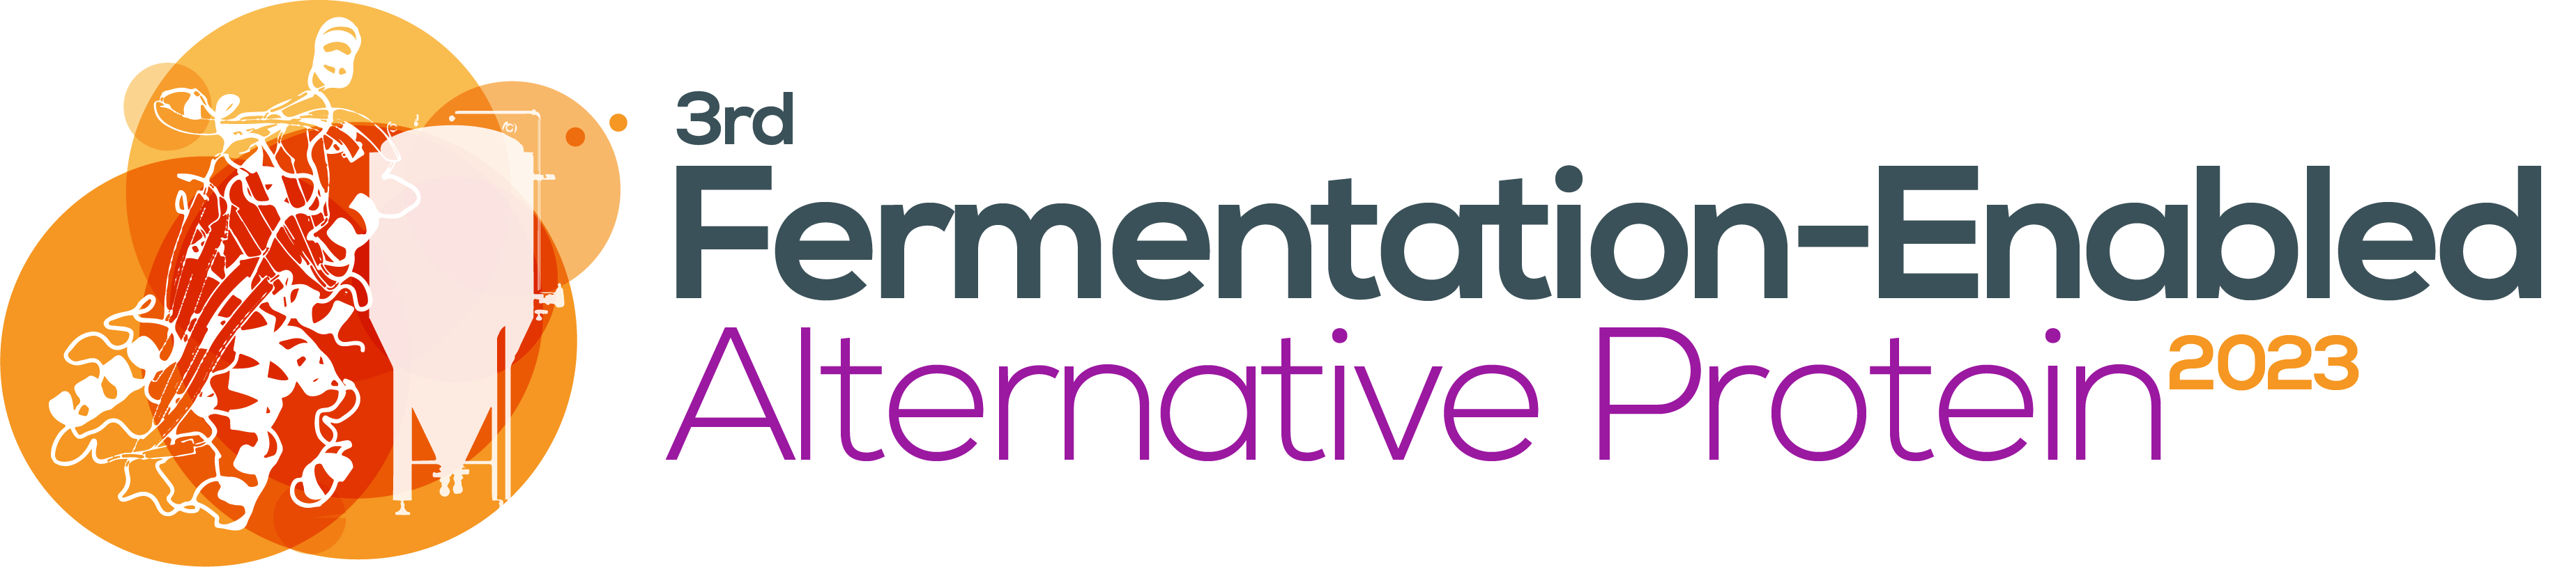 Fermentation-Enabled Alternative Protein Innovation logo FINAL